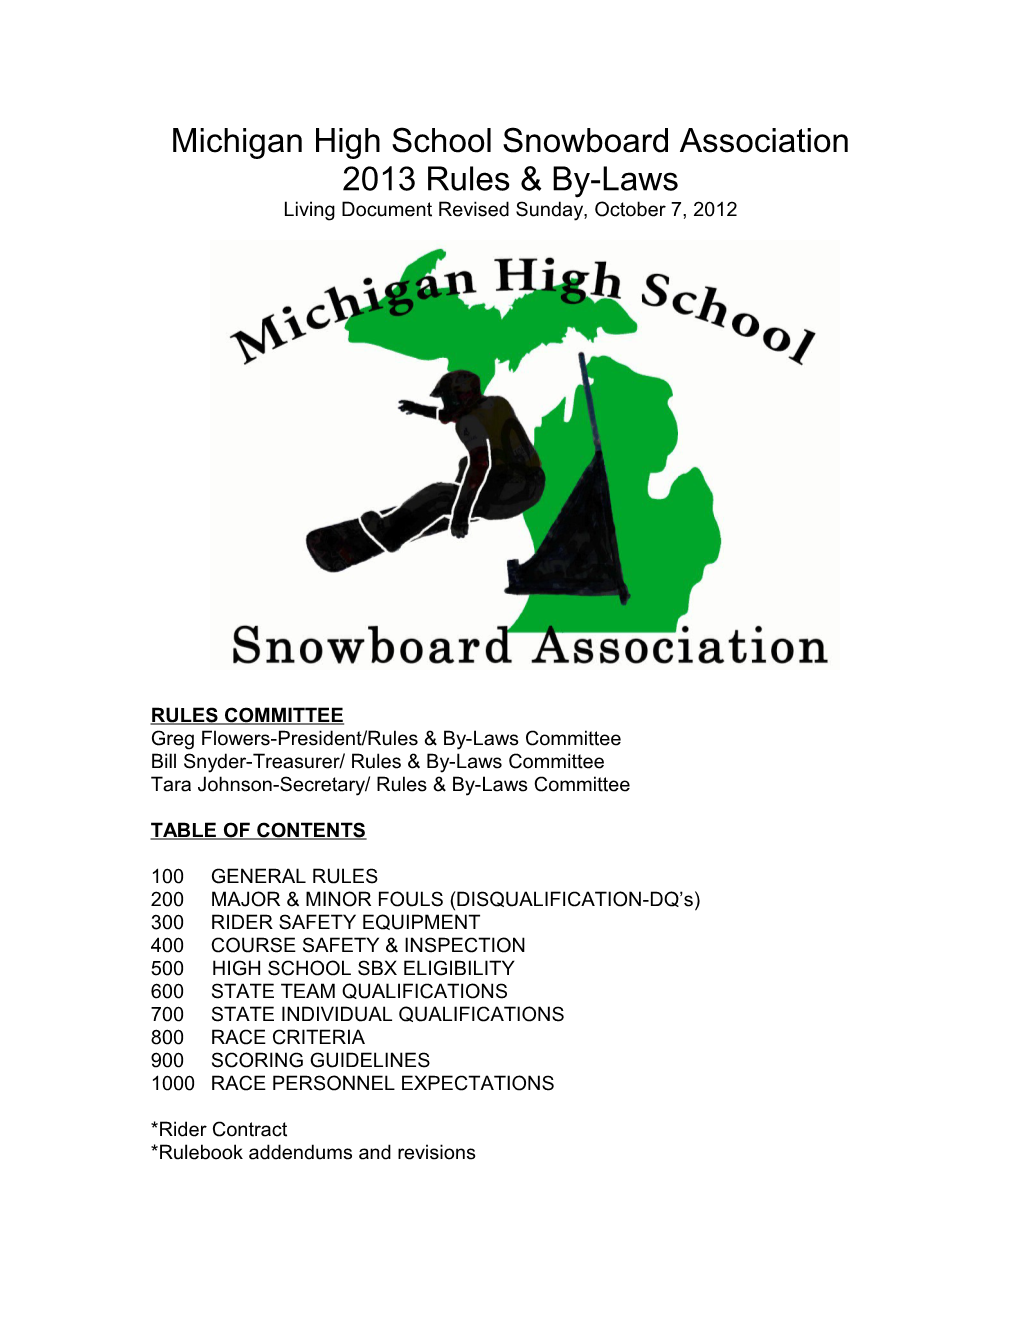 Michigan High School Snowboard Association 2013 Rules & By-Laws